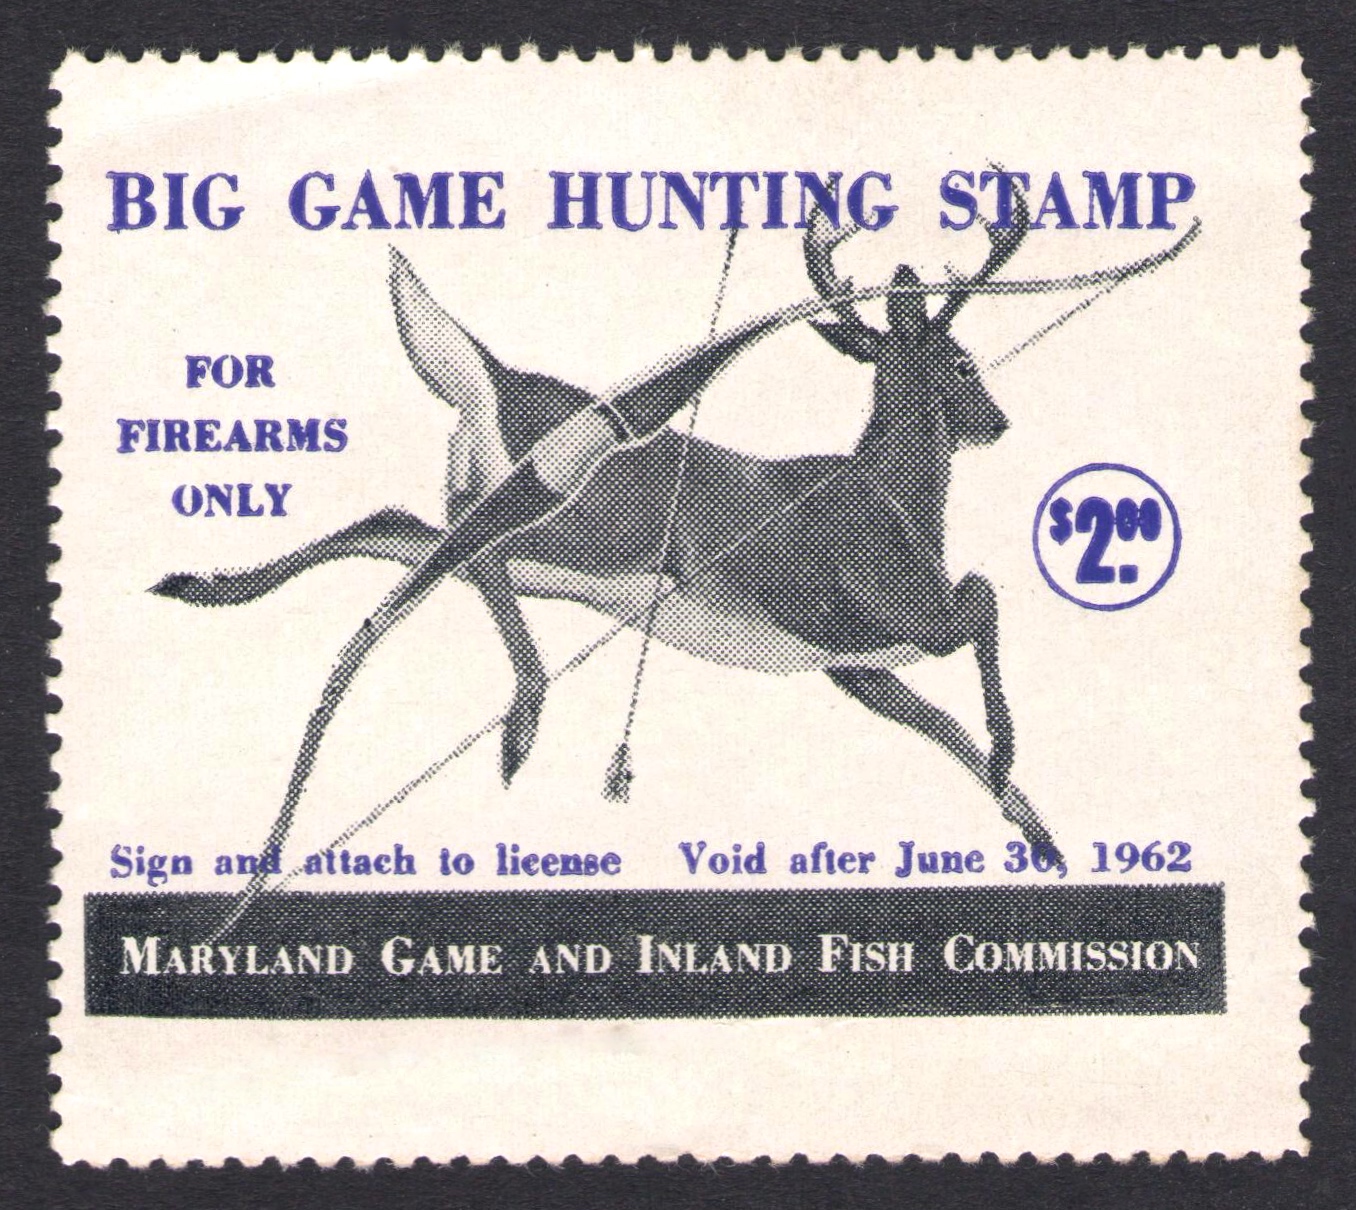 Bow & Arrow Error 1961-62 Firemarms Big Game Maryland